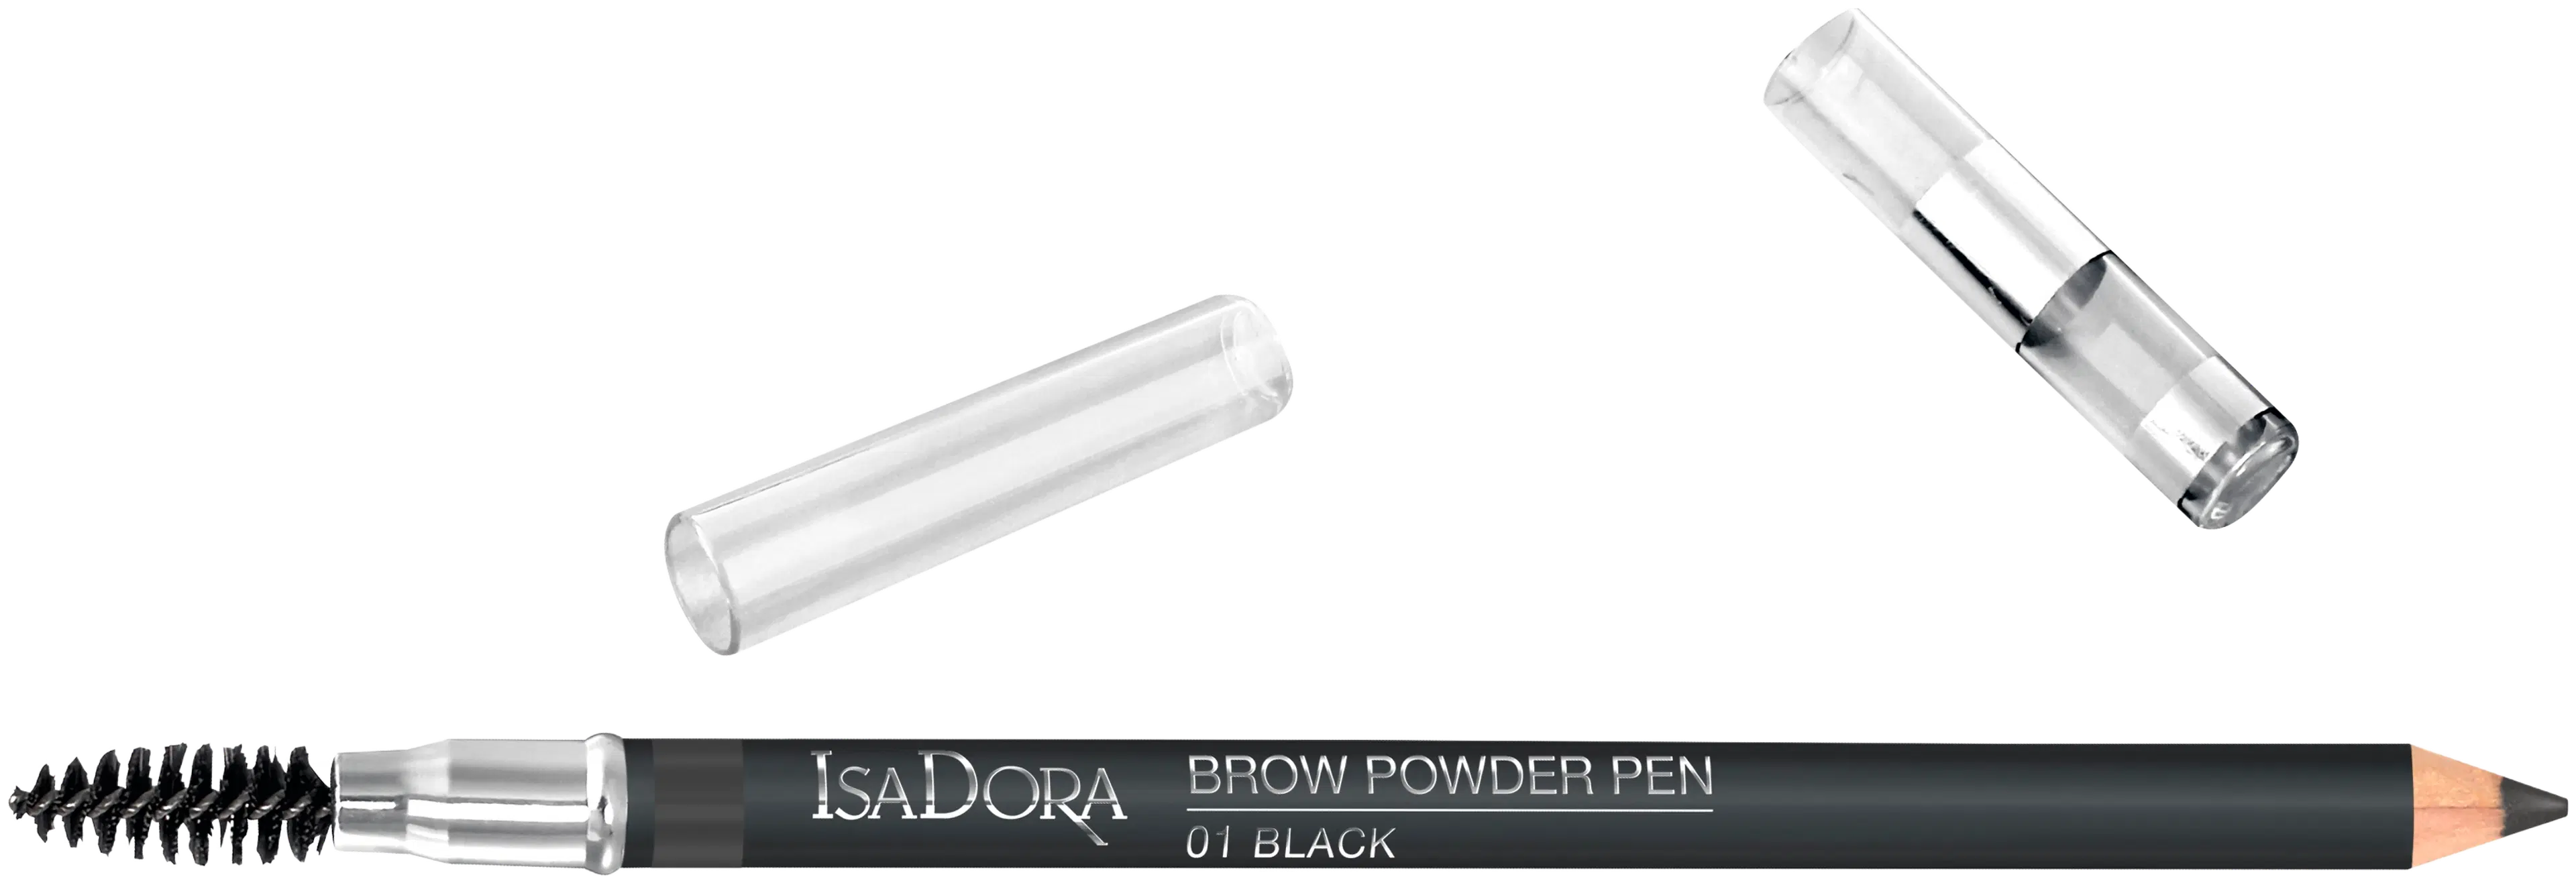 IsaDora Brown Powder Pen Kulmakynä 01 Black